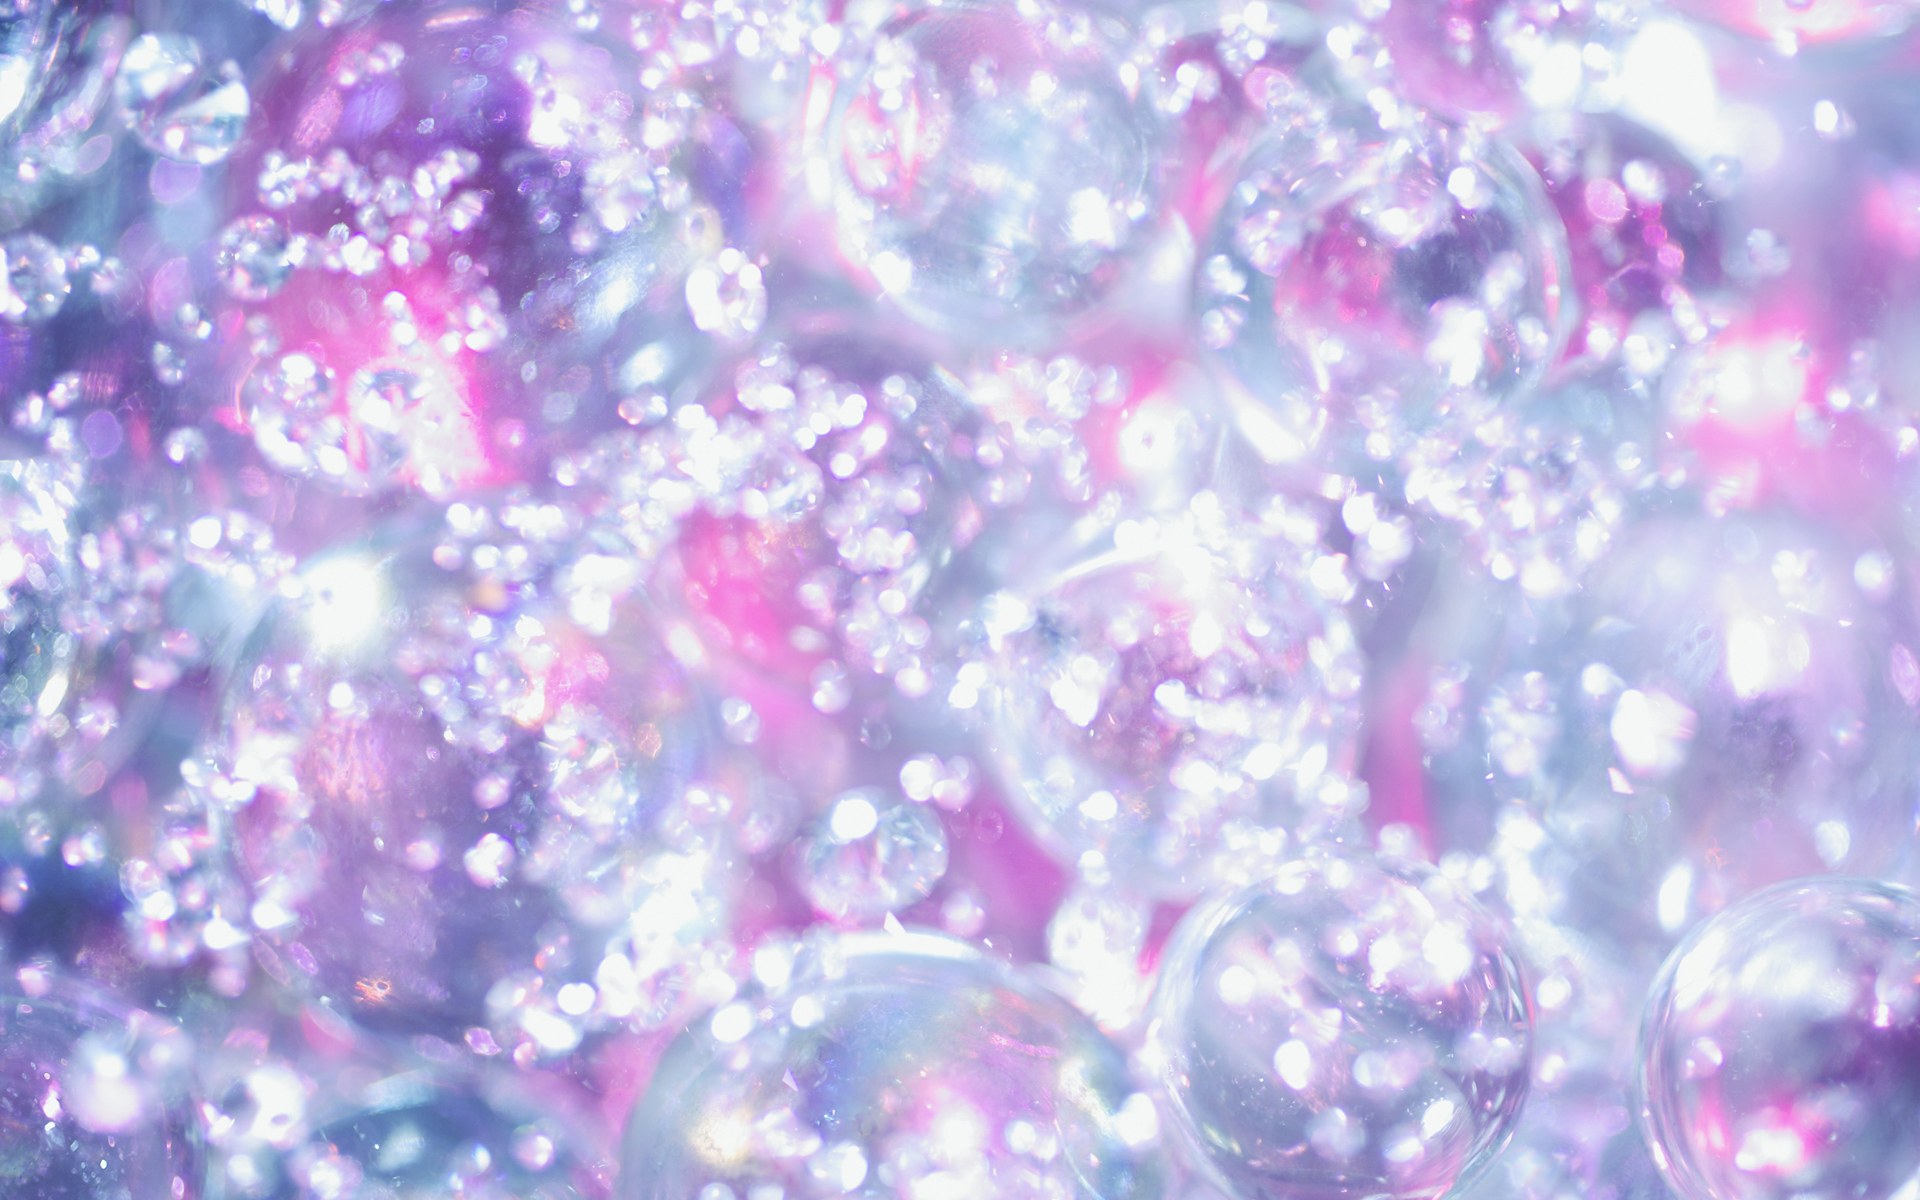  Crystals   Romantic Sparkling Backgrounds 19201200 NO15 Wallpaper